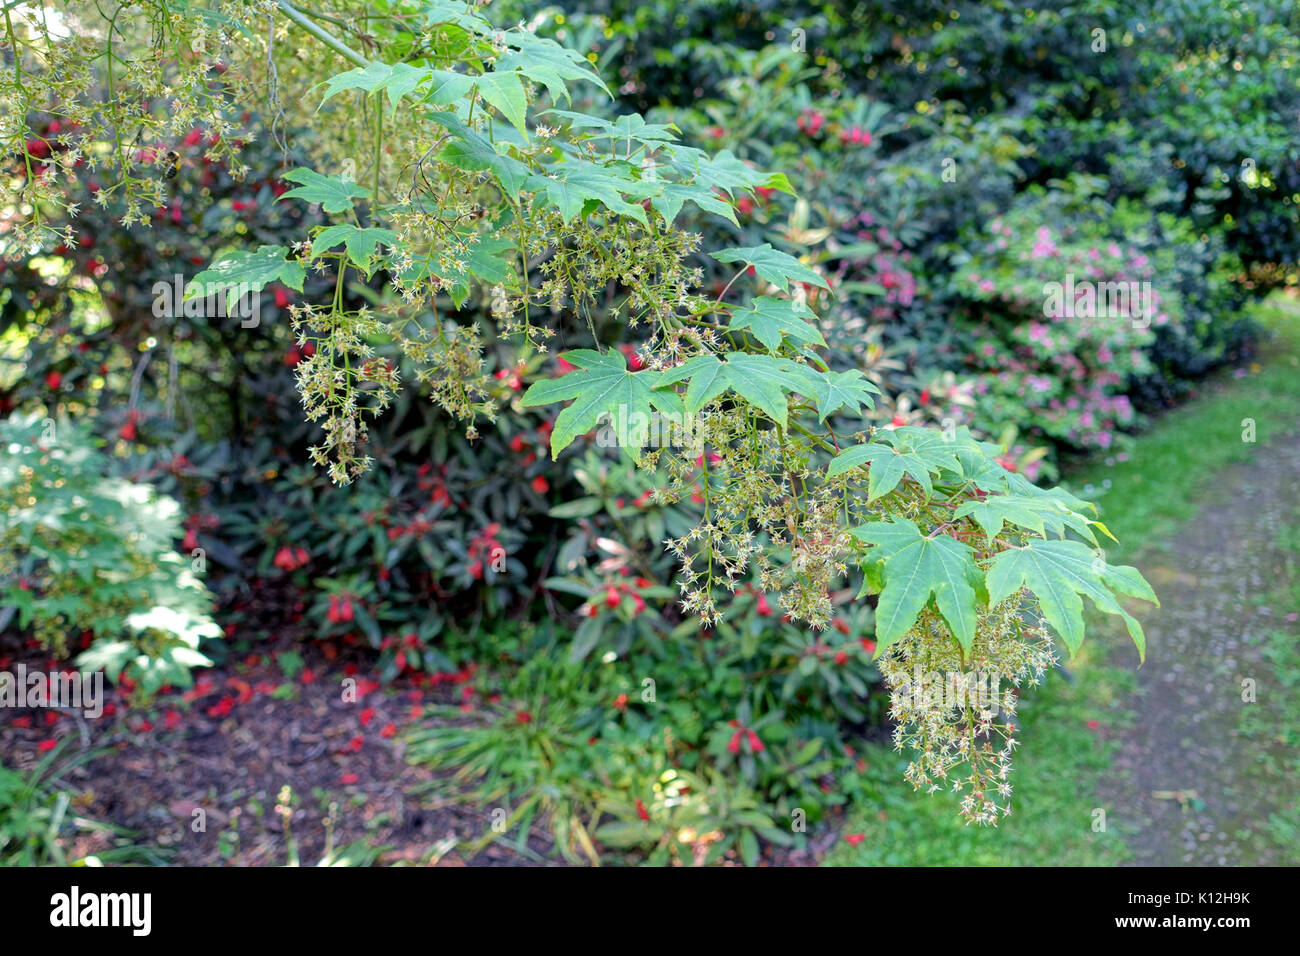 Acer campbellii subsp. flabellatum   Savill Garden   Windsor Great Park, England   DSC06248 Stock Photo